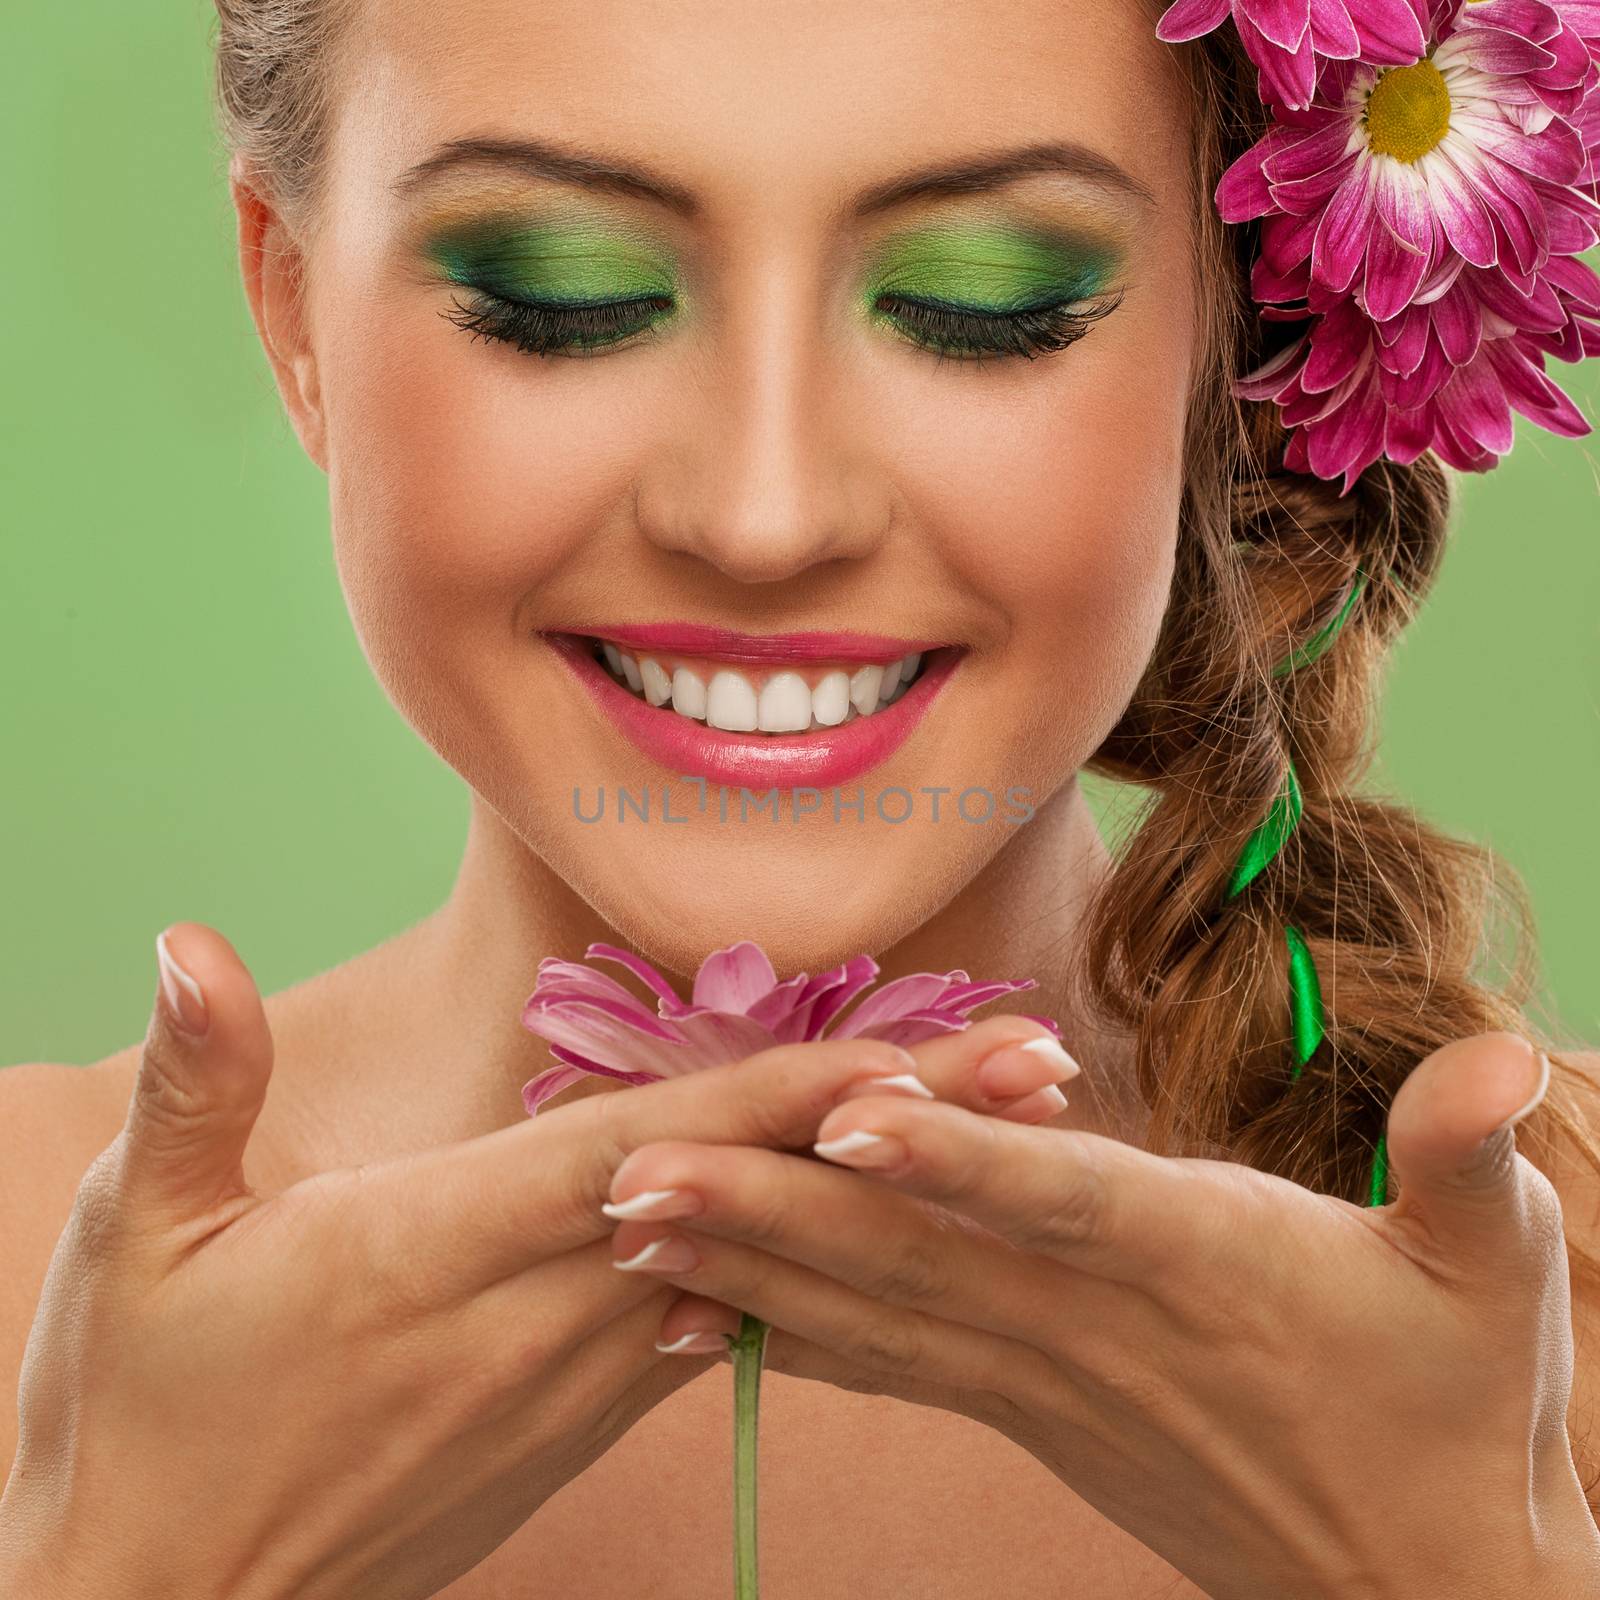 Beautiful woman with makeup and flowers by rufatjumali